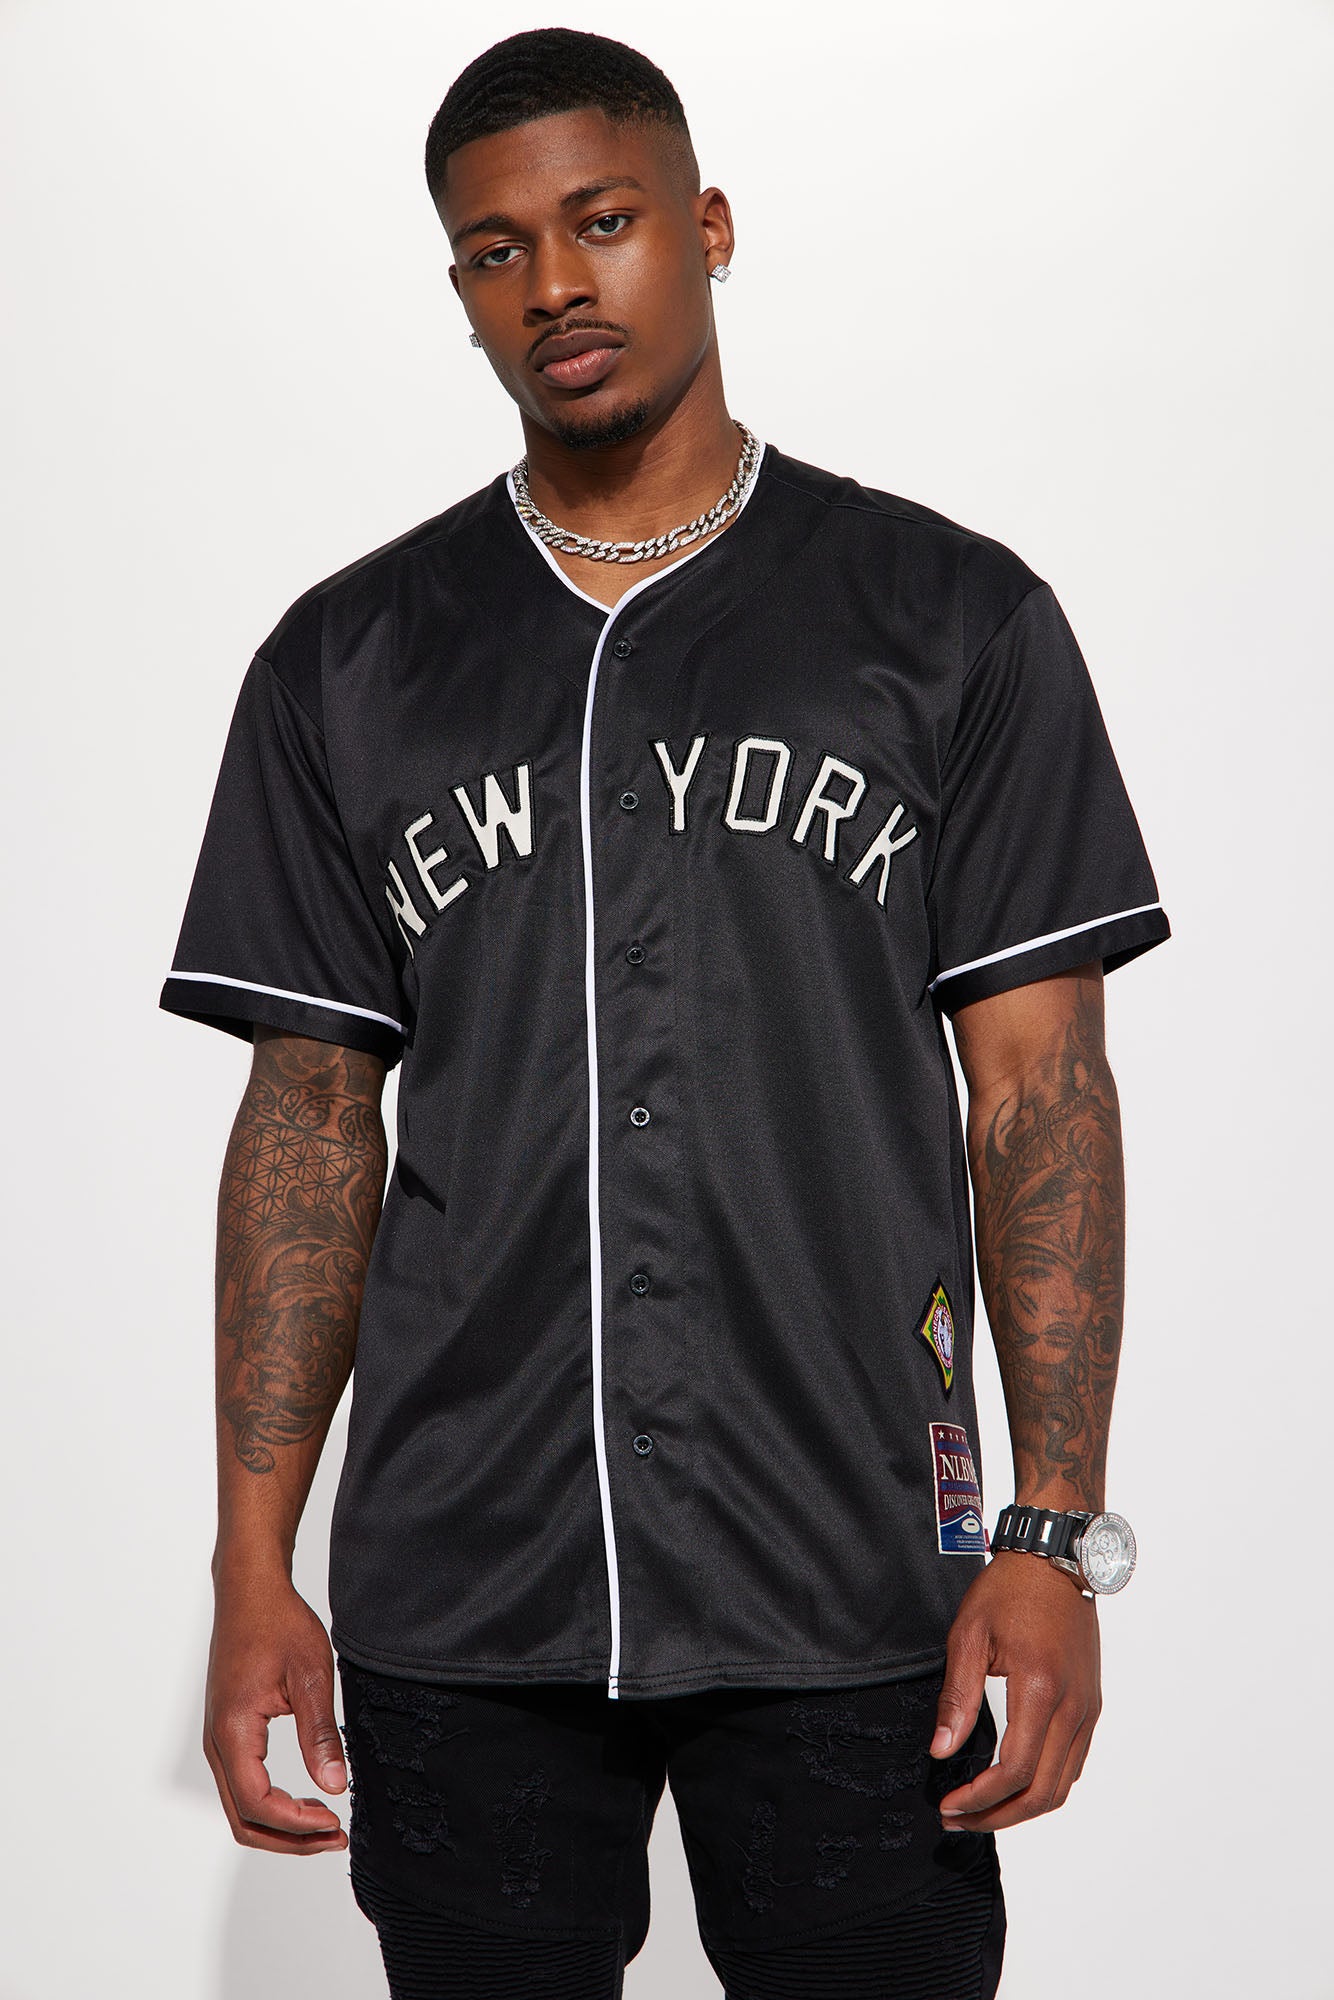 buy new york yankees jersey